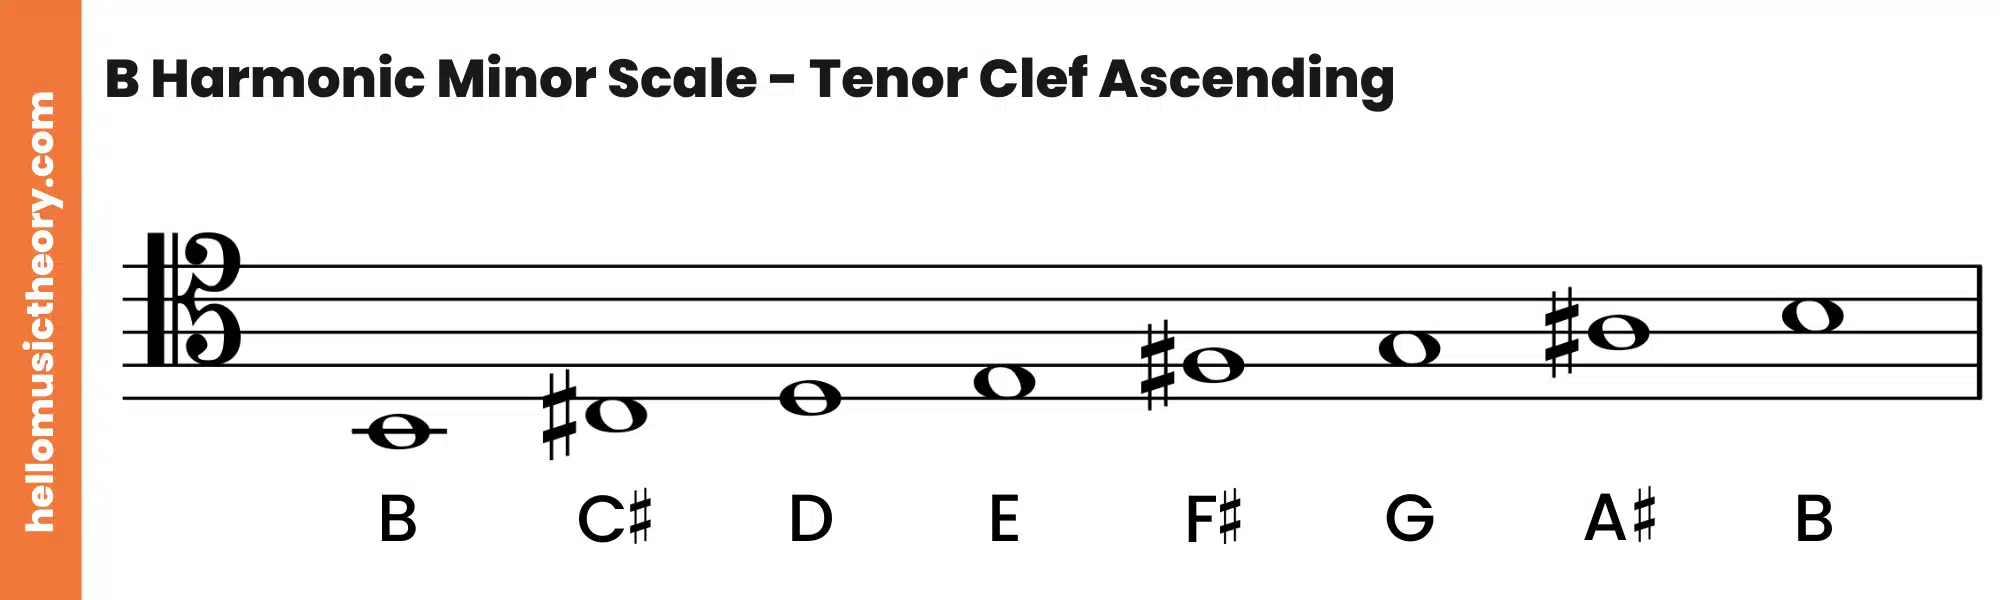 B Harmonic Minor Scale Tenor Clef Ascending